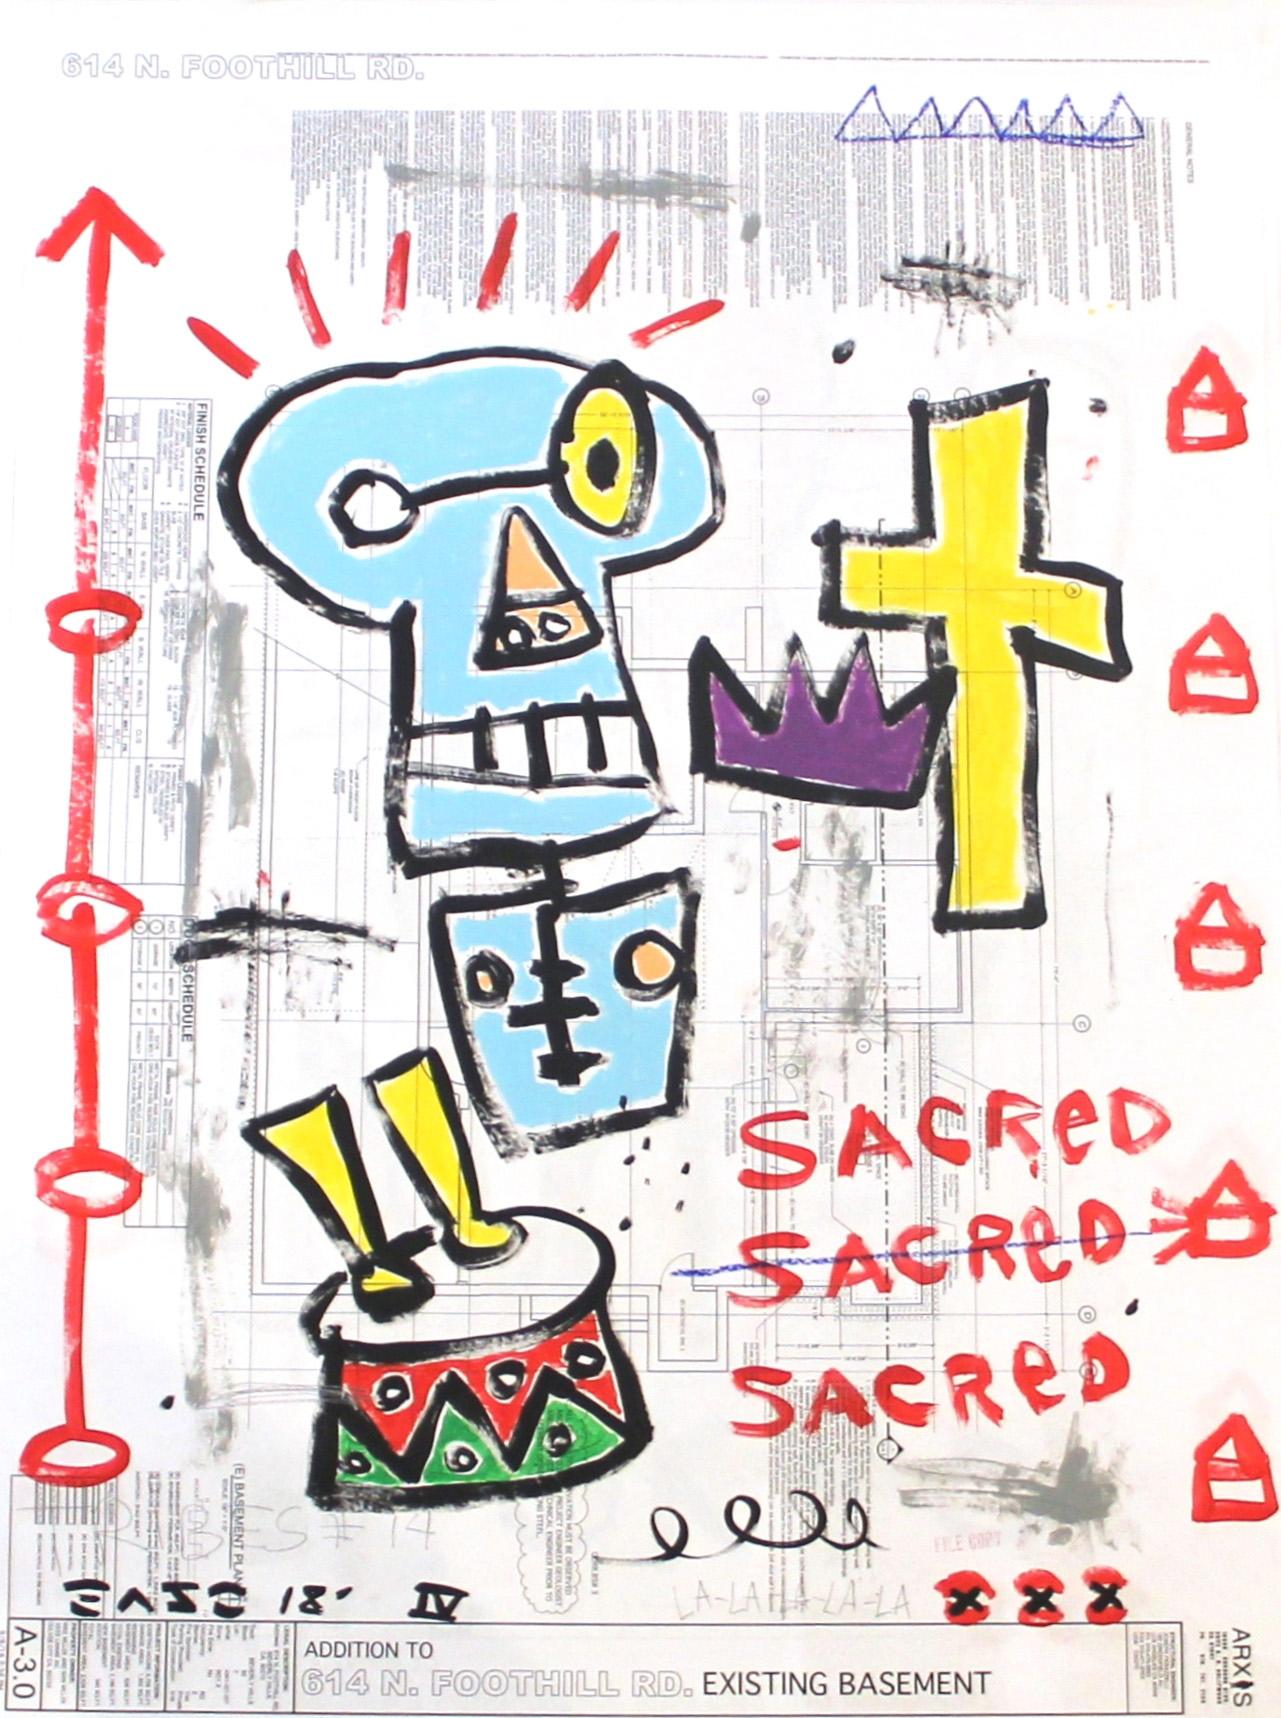 "Sacred Ground" -  Original Colourful Pop Street Art Painting by Gary John